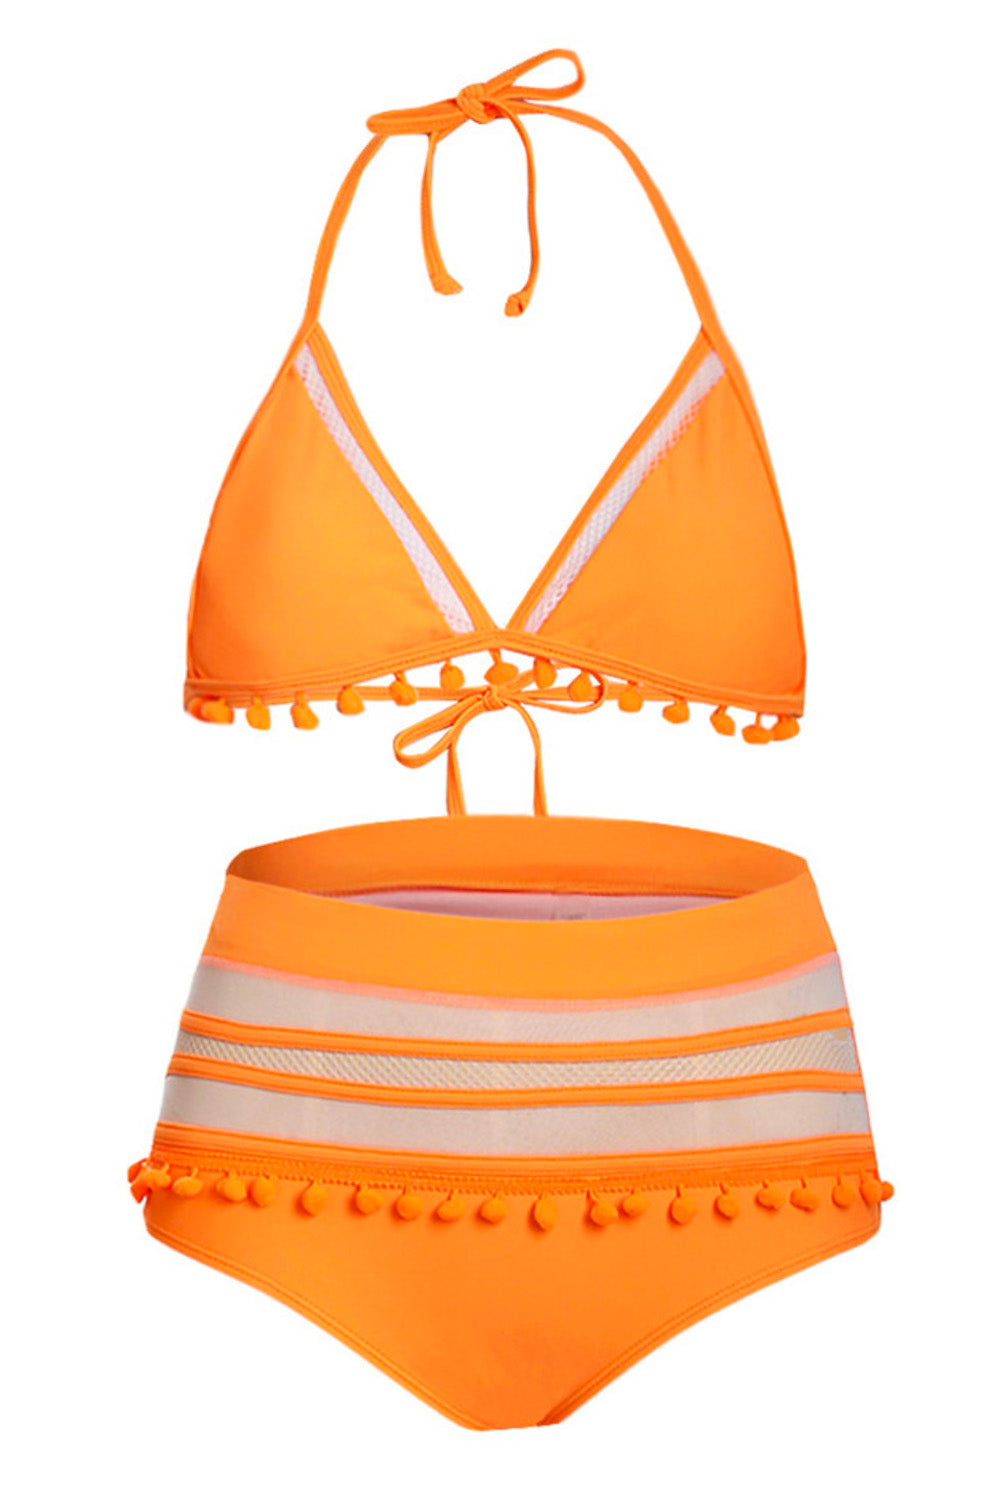 Iyasson Women's High Waist Two Pieces Bikini Set Padded Stripe Tassel Swimsuit